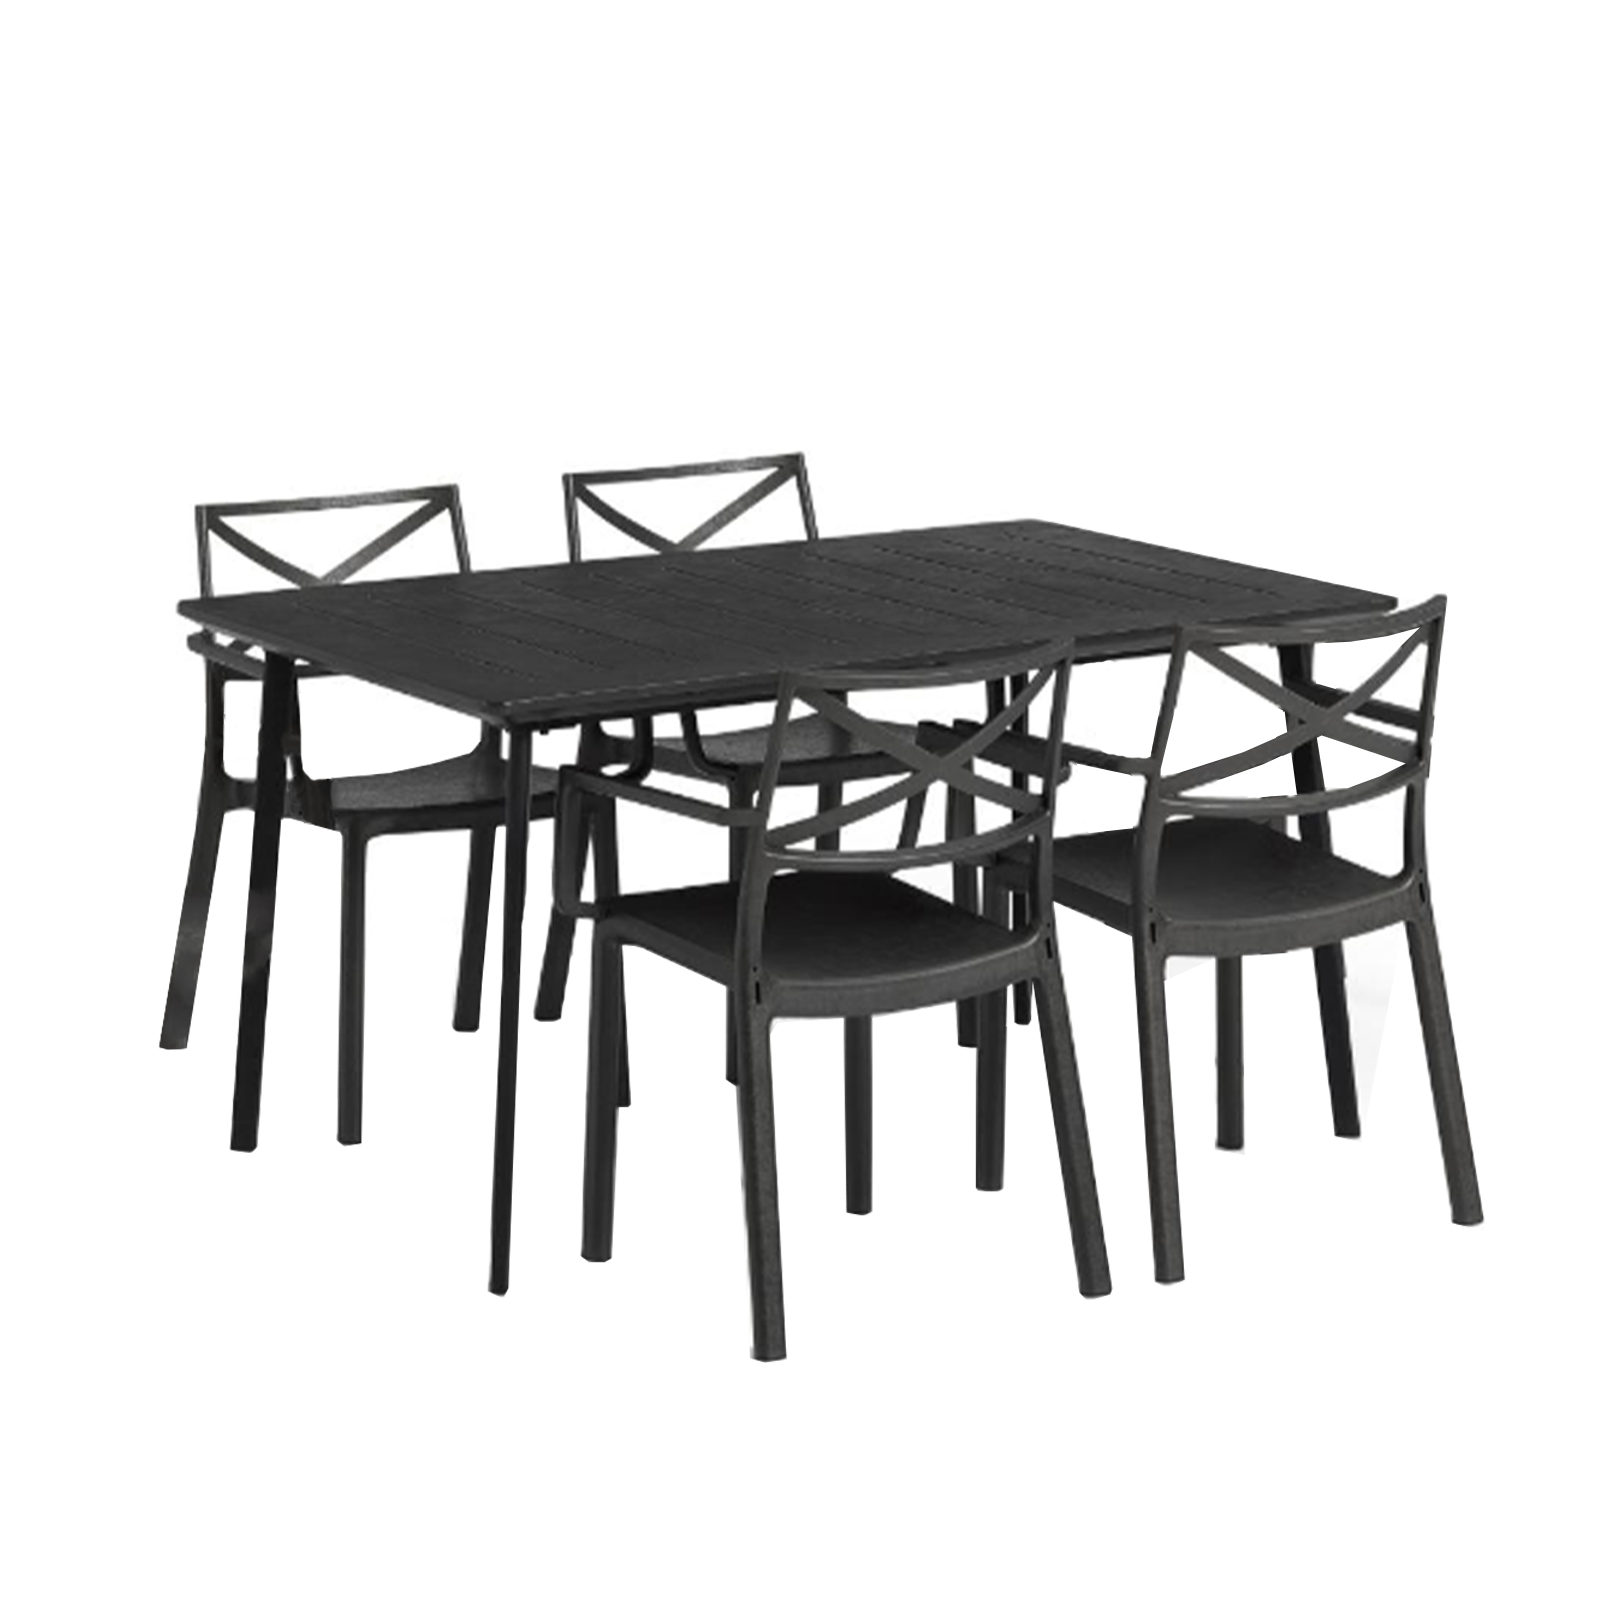 Set da pranzo con 4 sedie + tavolo Cast Iron in resina effetto ghisa da giardino